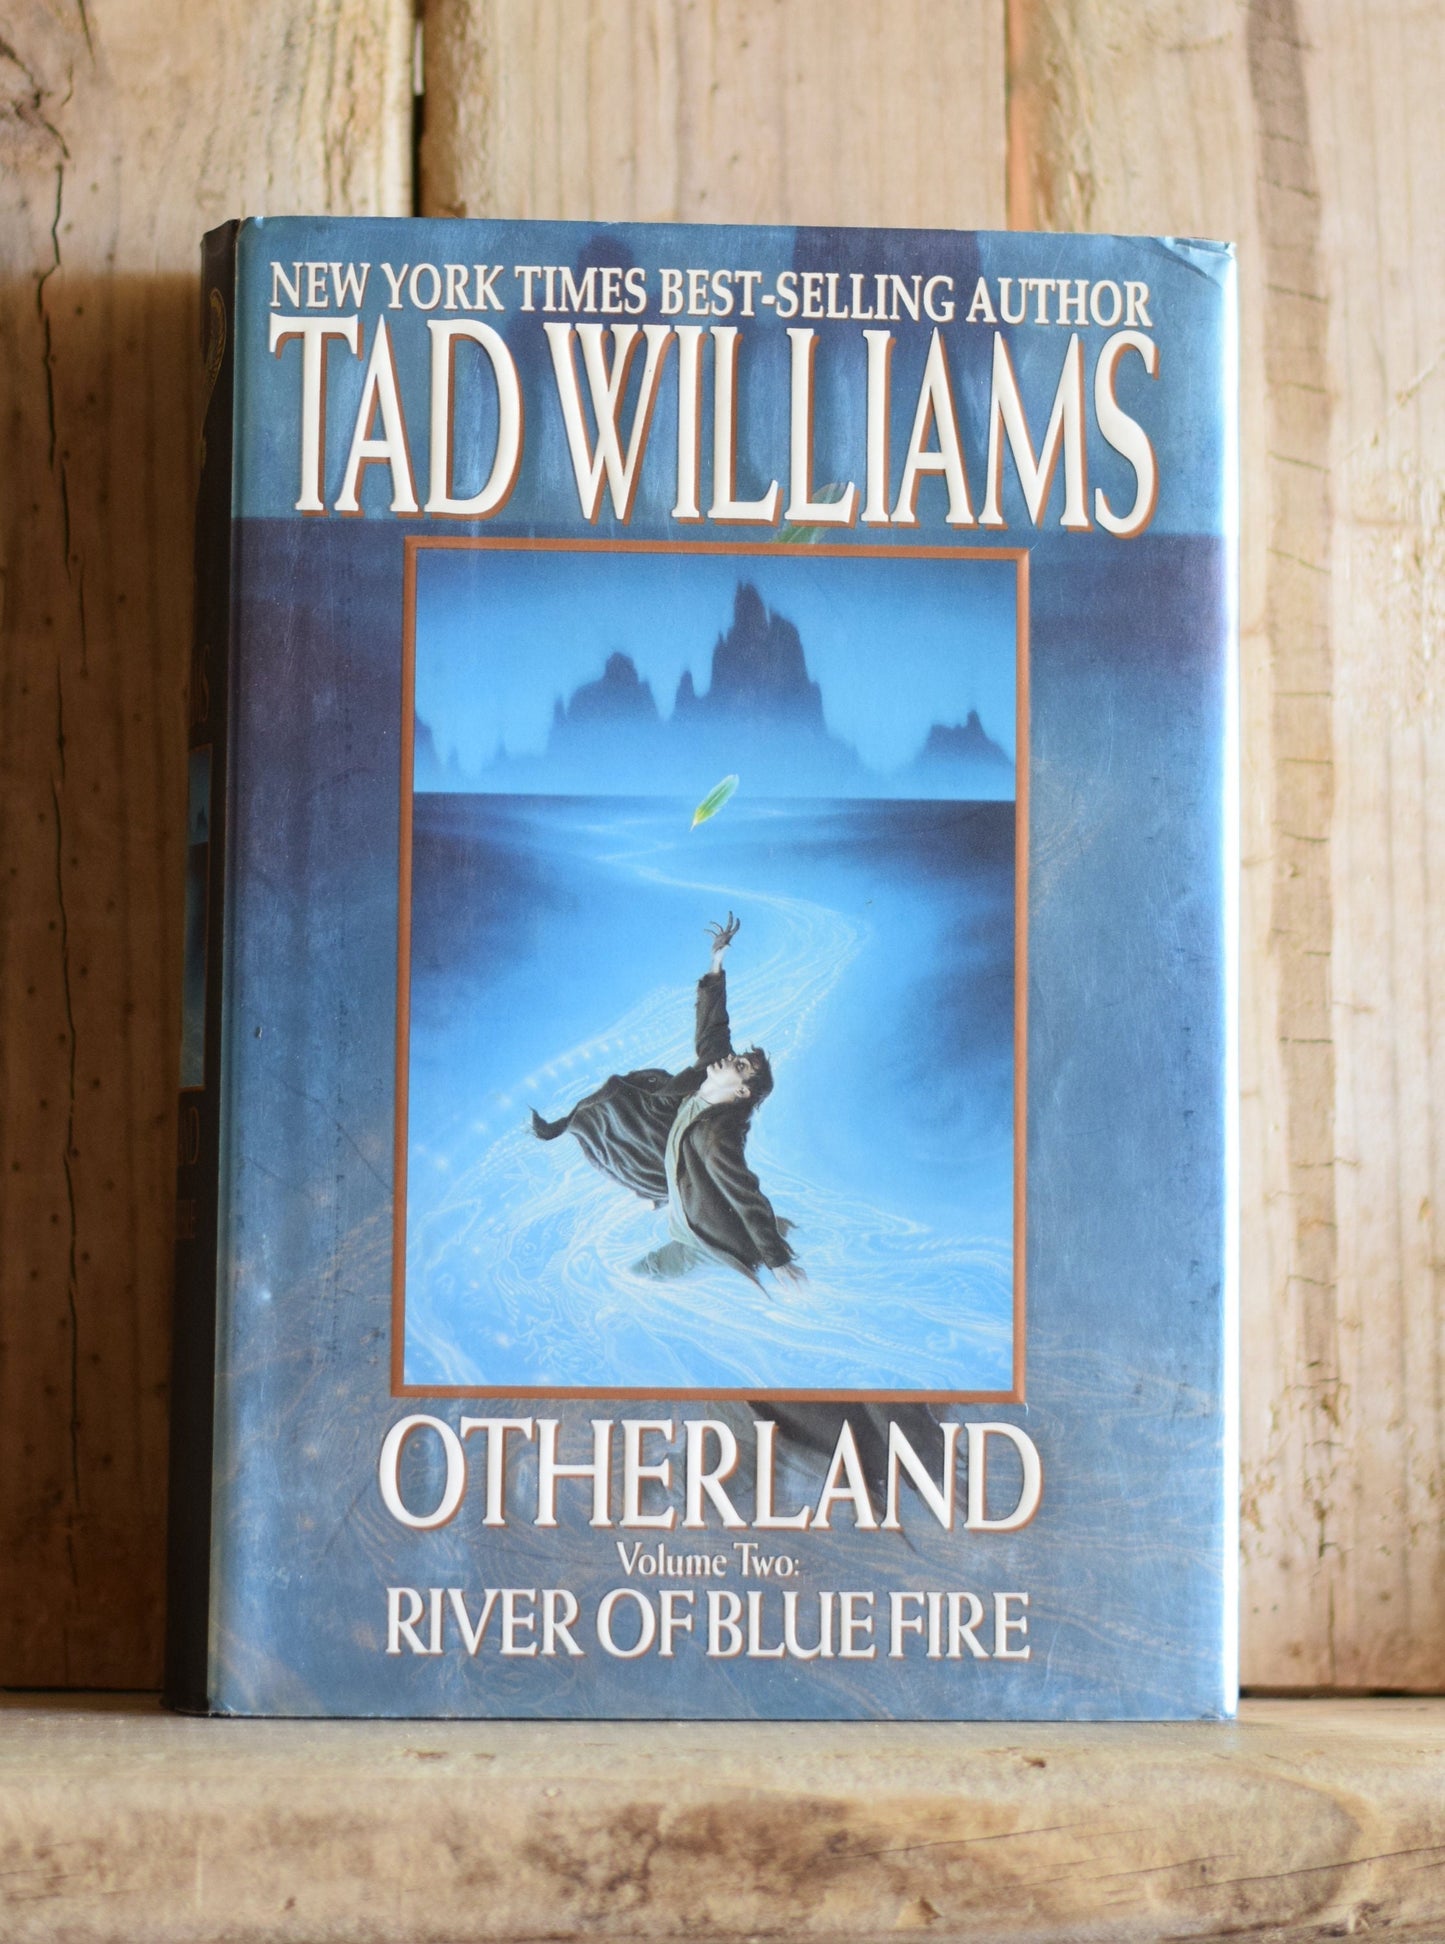 Vintage Fantasy Hardback Novel: Tad Williams - Otherland Vol 2 - River of Blue Fire FIRST EDITION/PRINTING